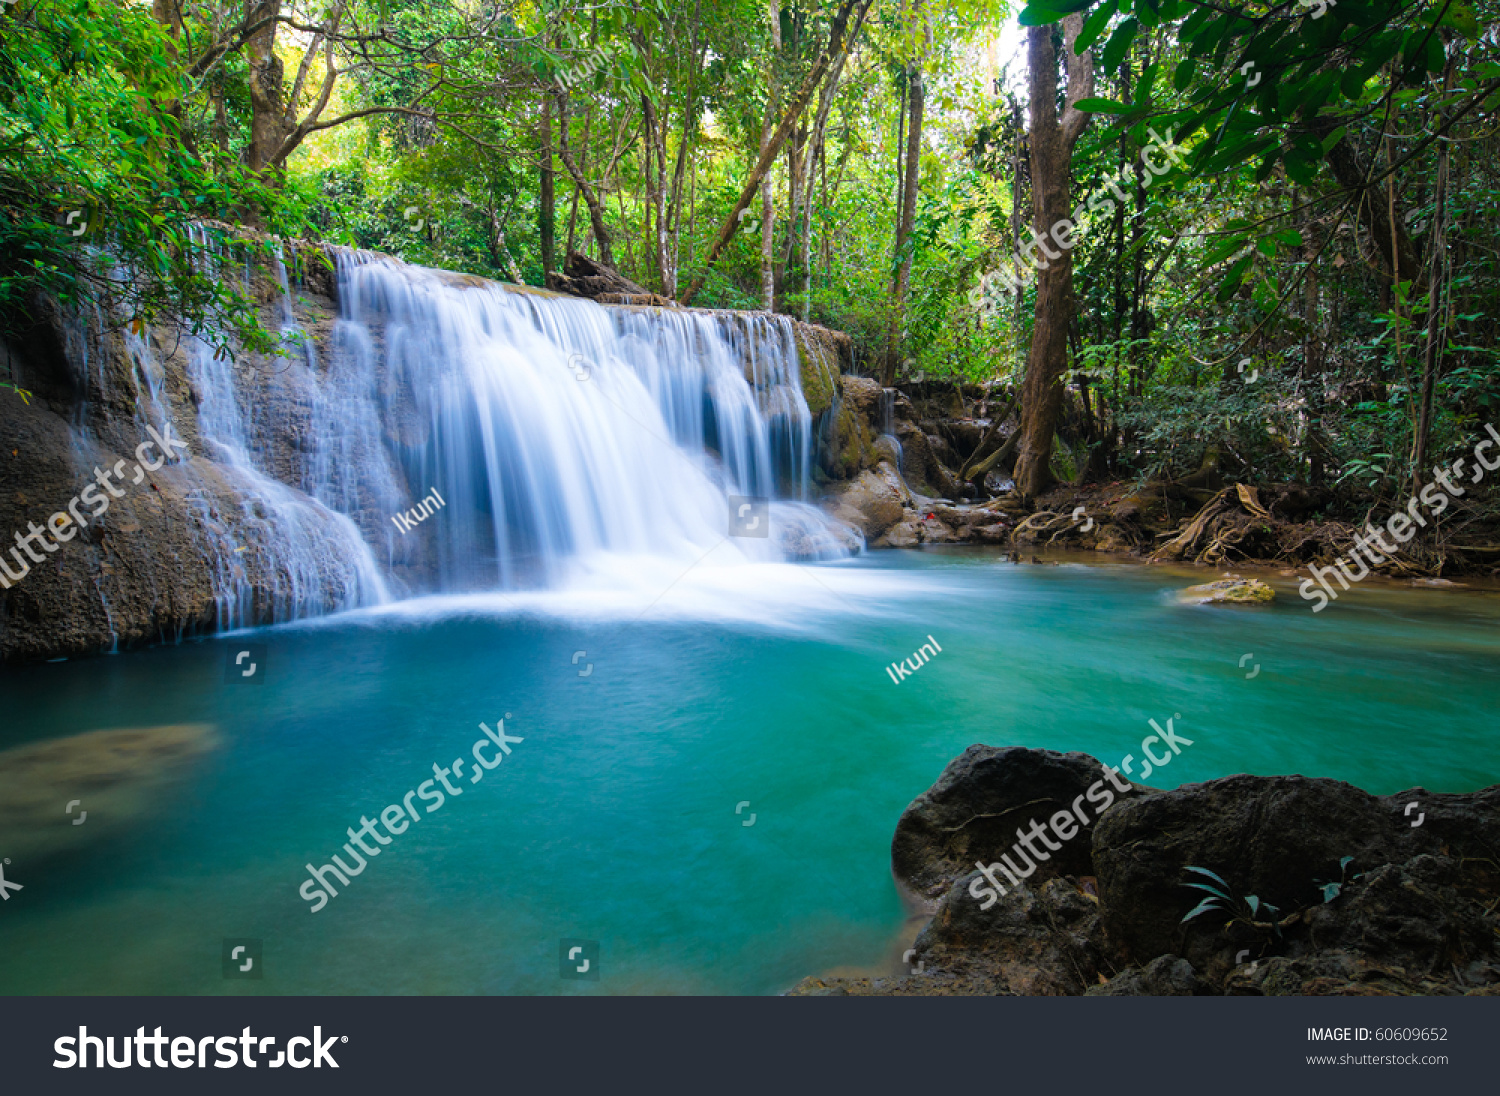 Deep forest Waterfall in Kanchanaburi, Thailand #60609652